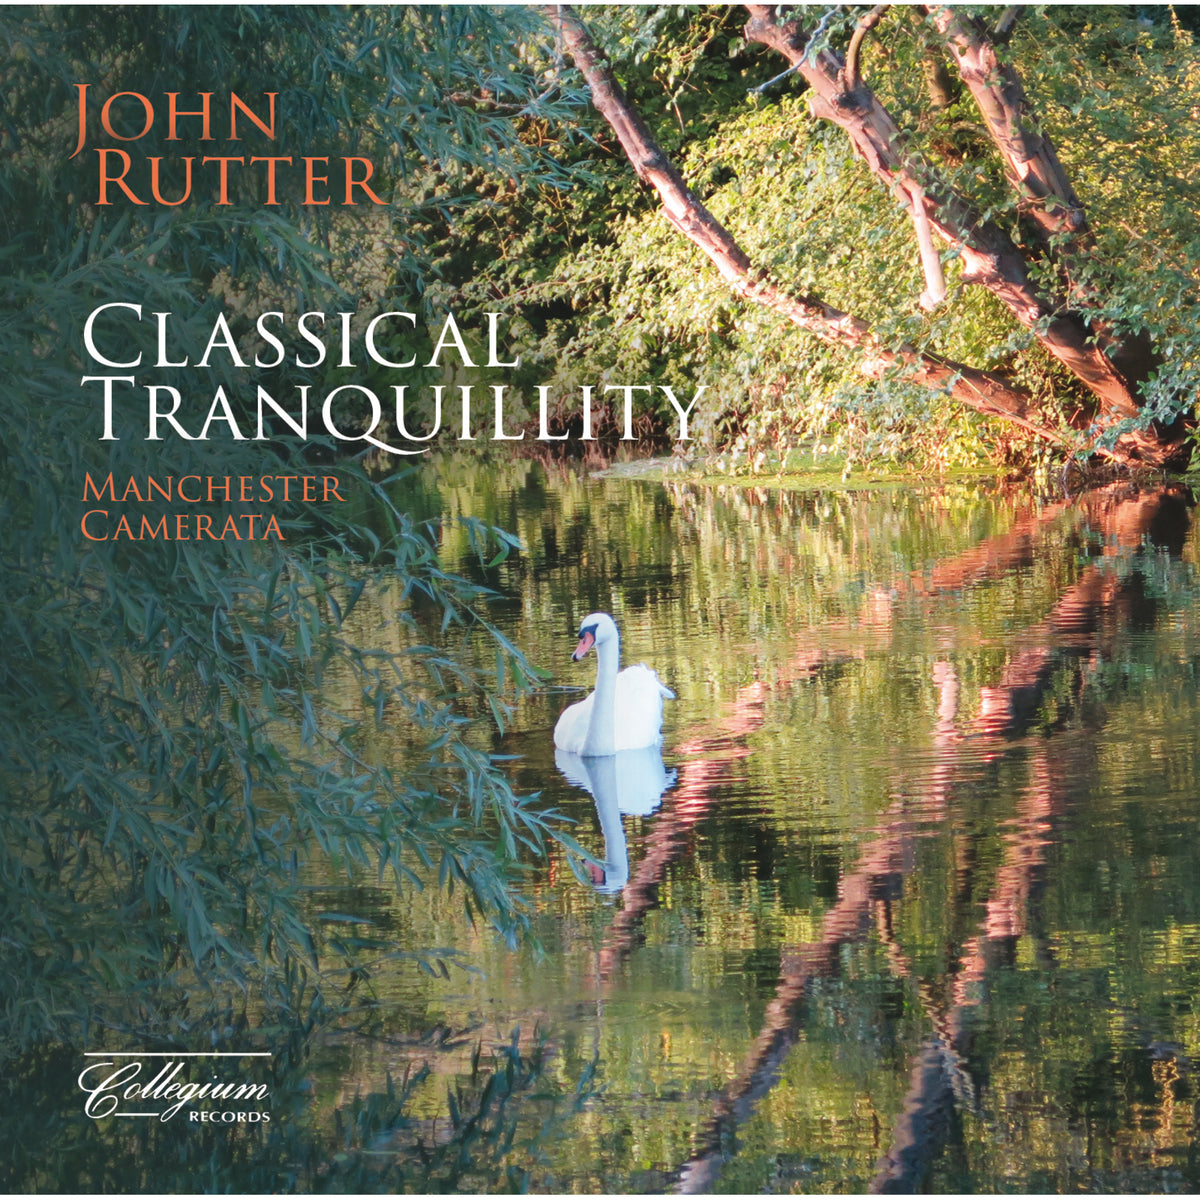 Manchester Camerata, John Rutter - Classical Tranquility - CSCDS402